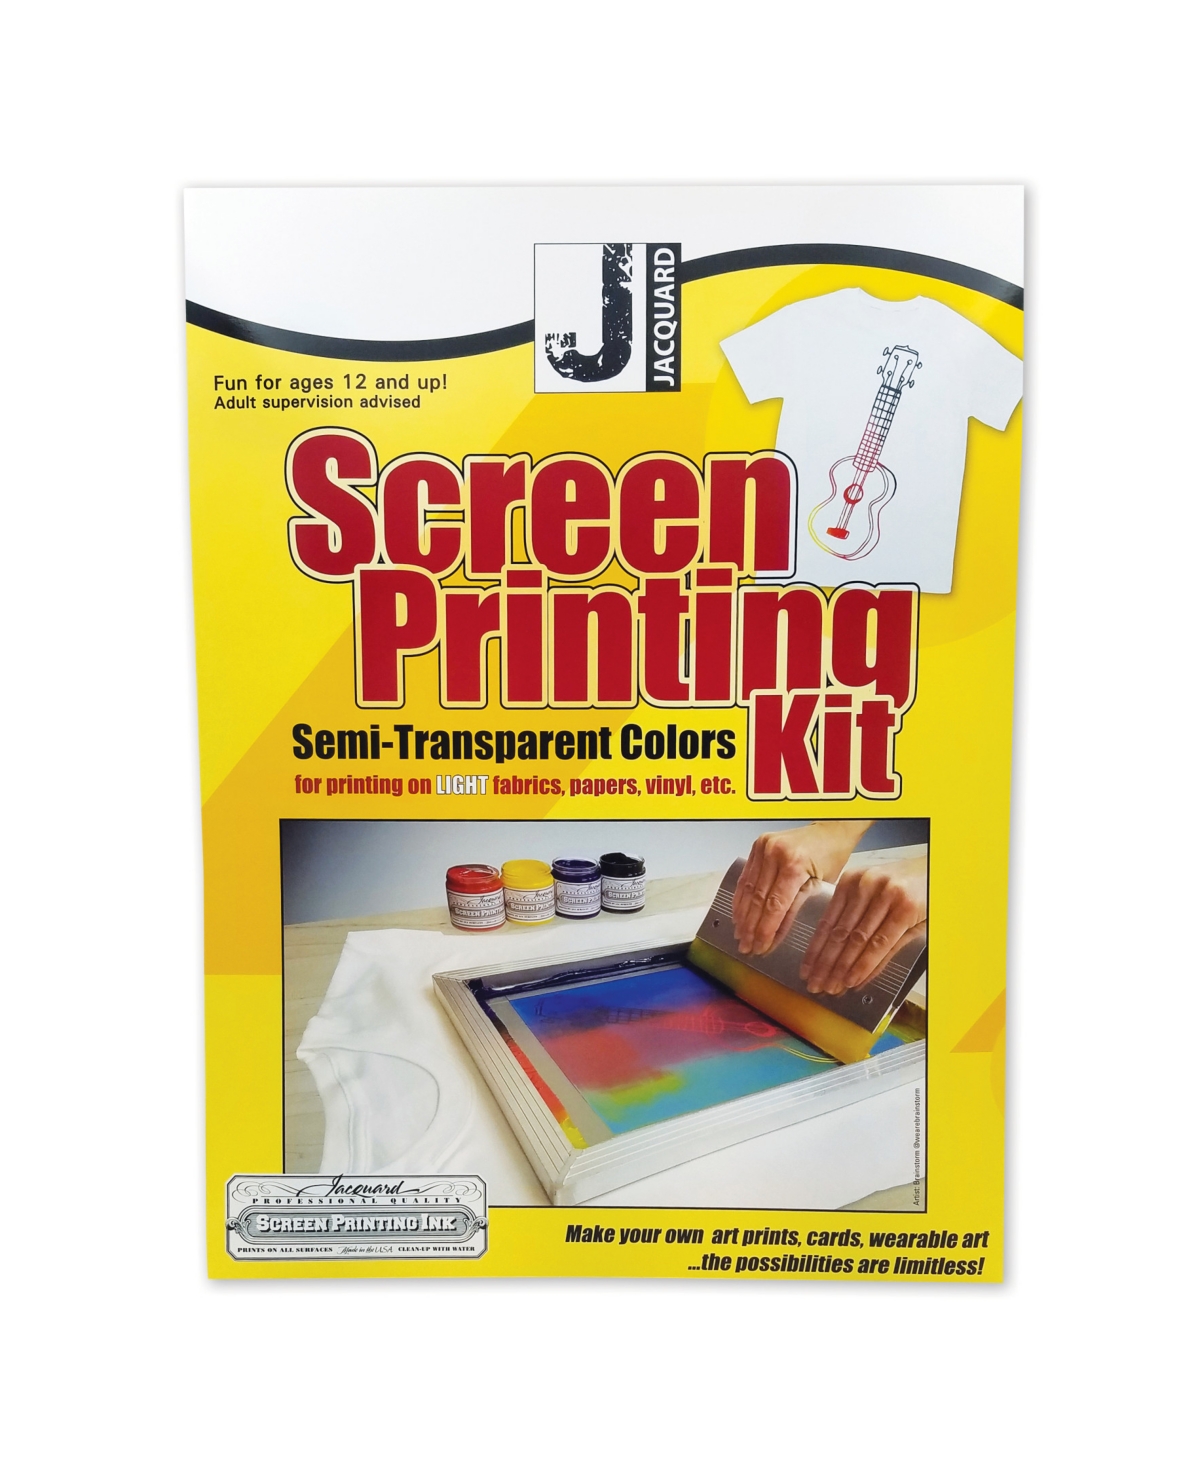 Professional Quality Screen Printing Kit, Semi-Transparent Colors